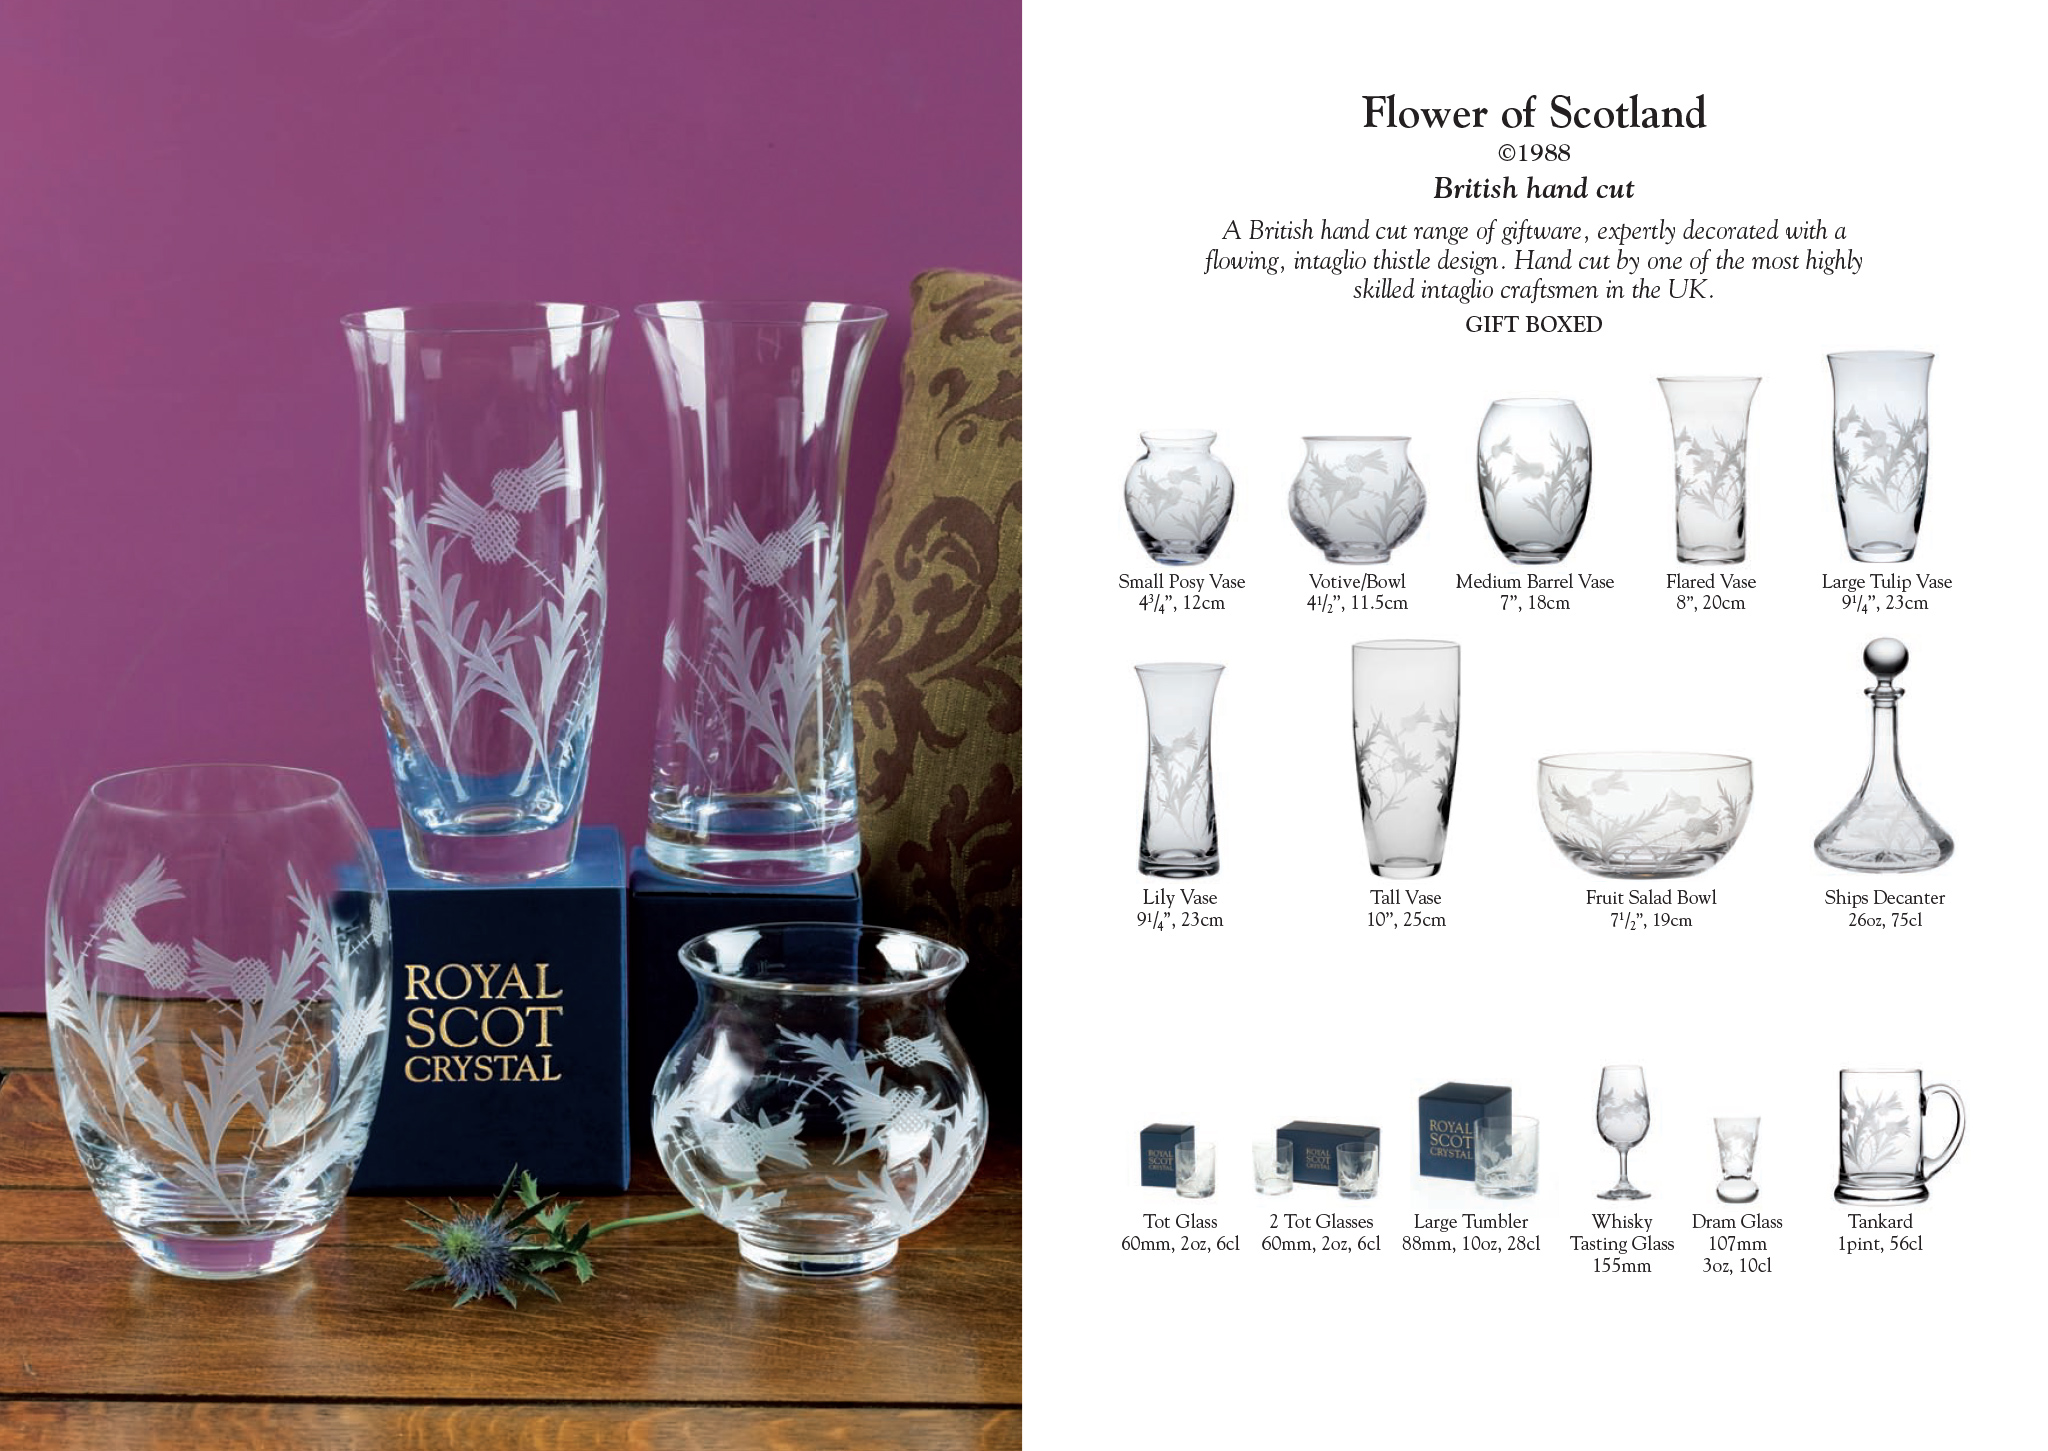 Royal scot Crystal - Flower of Scotland